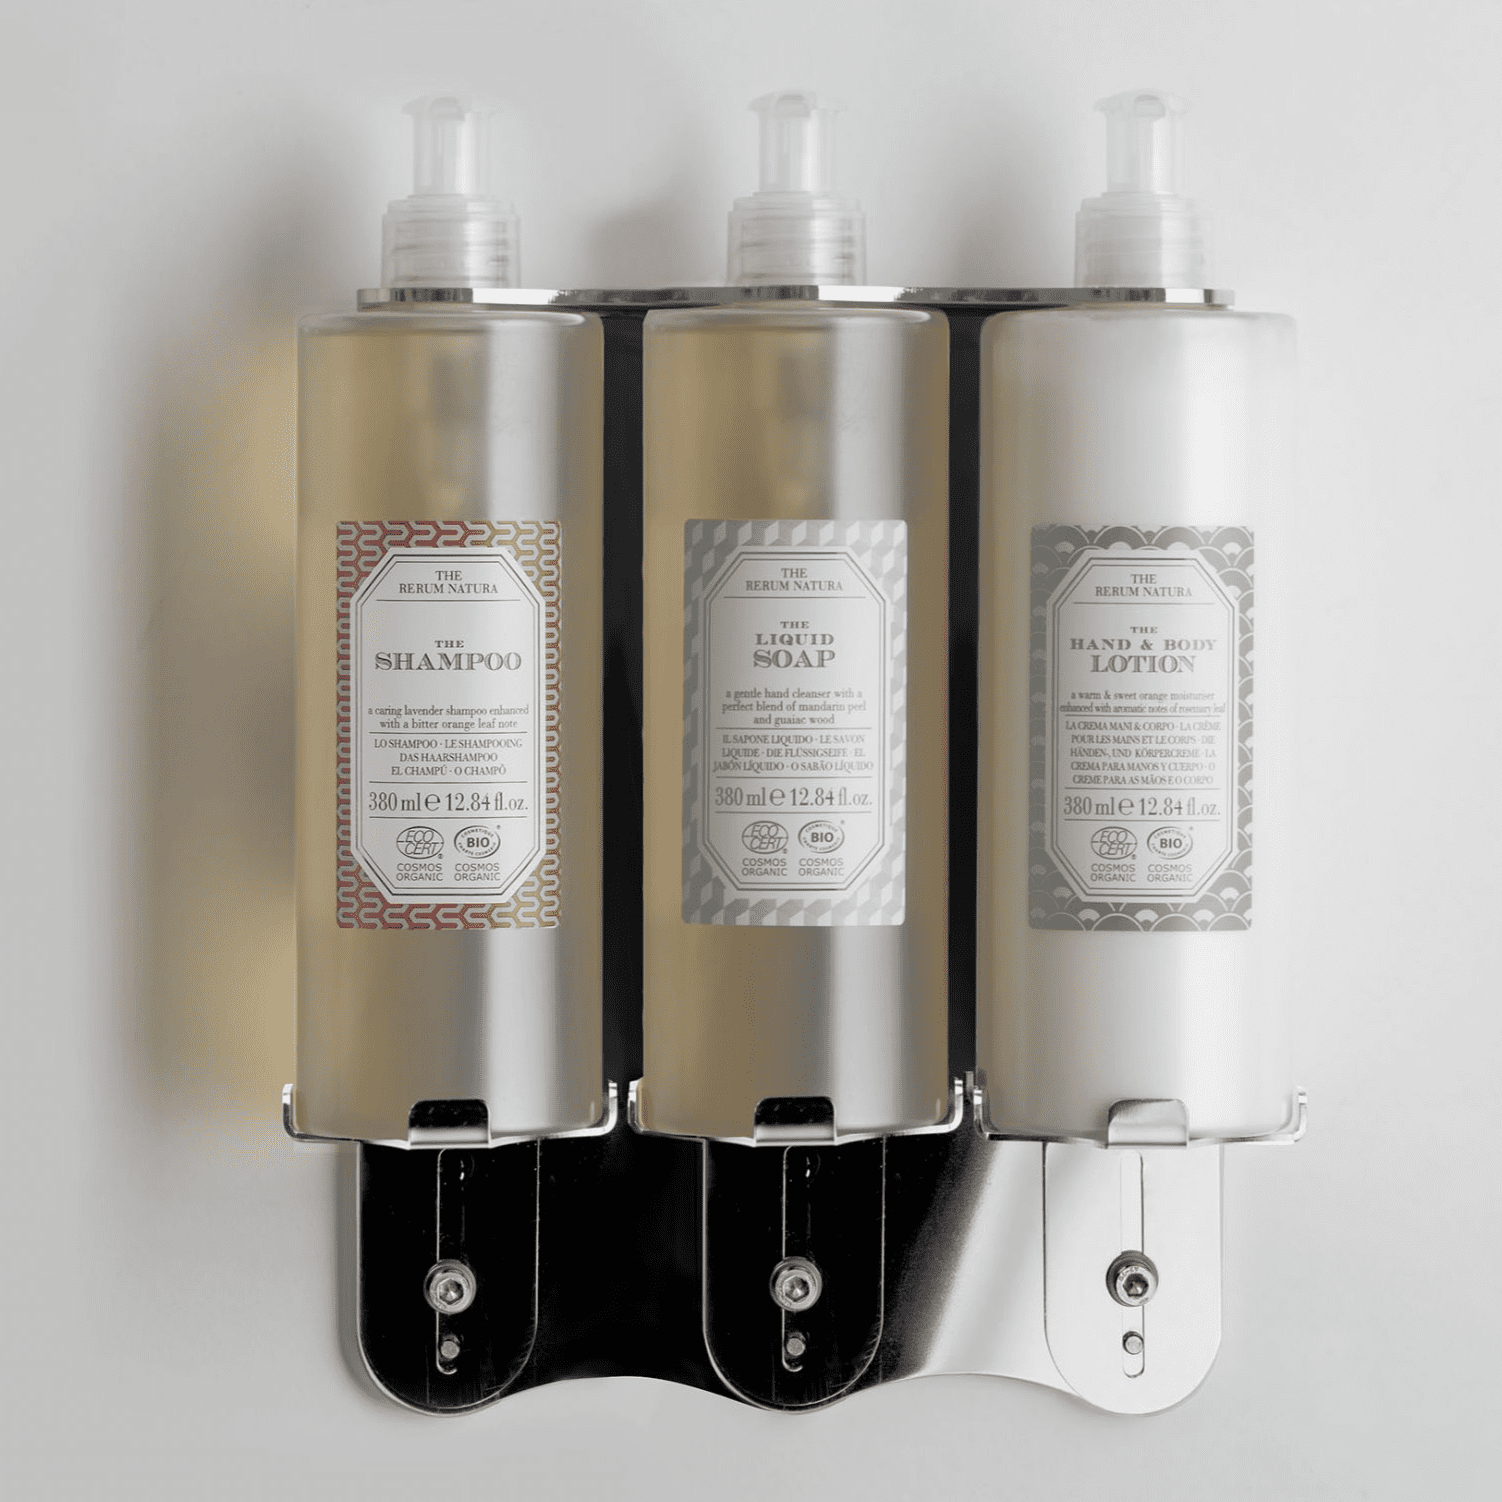 Triple pump dispenser bracket in stainless steel with Rerum Natura soap bottles